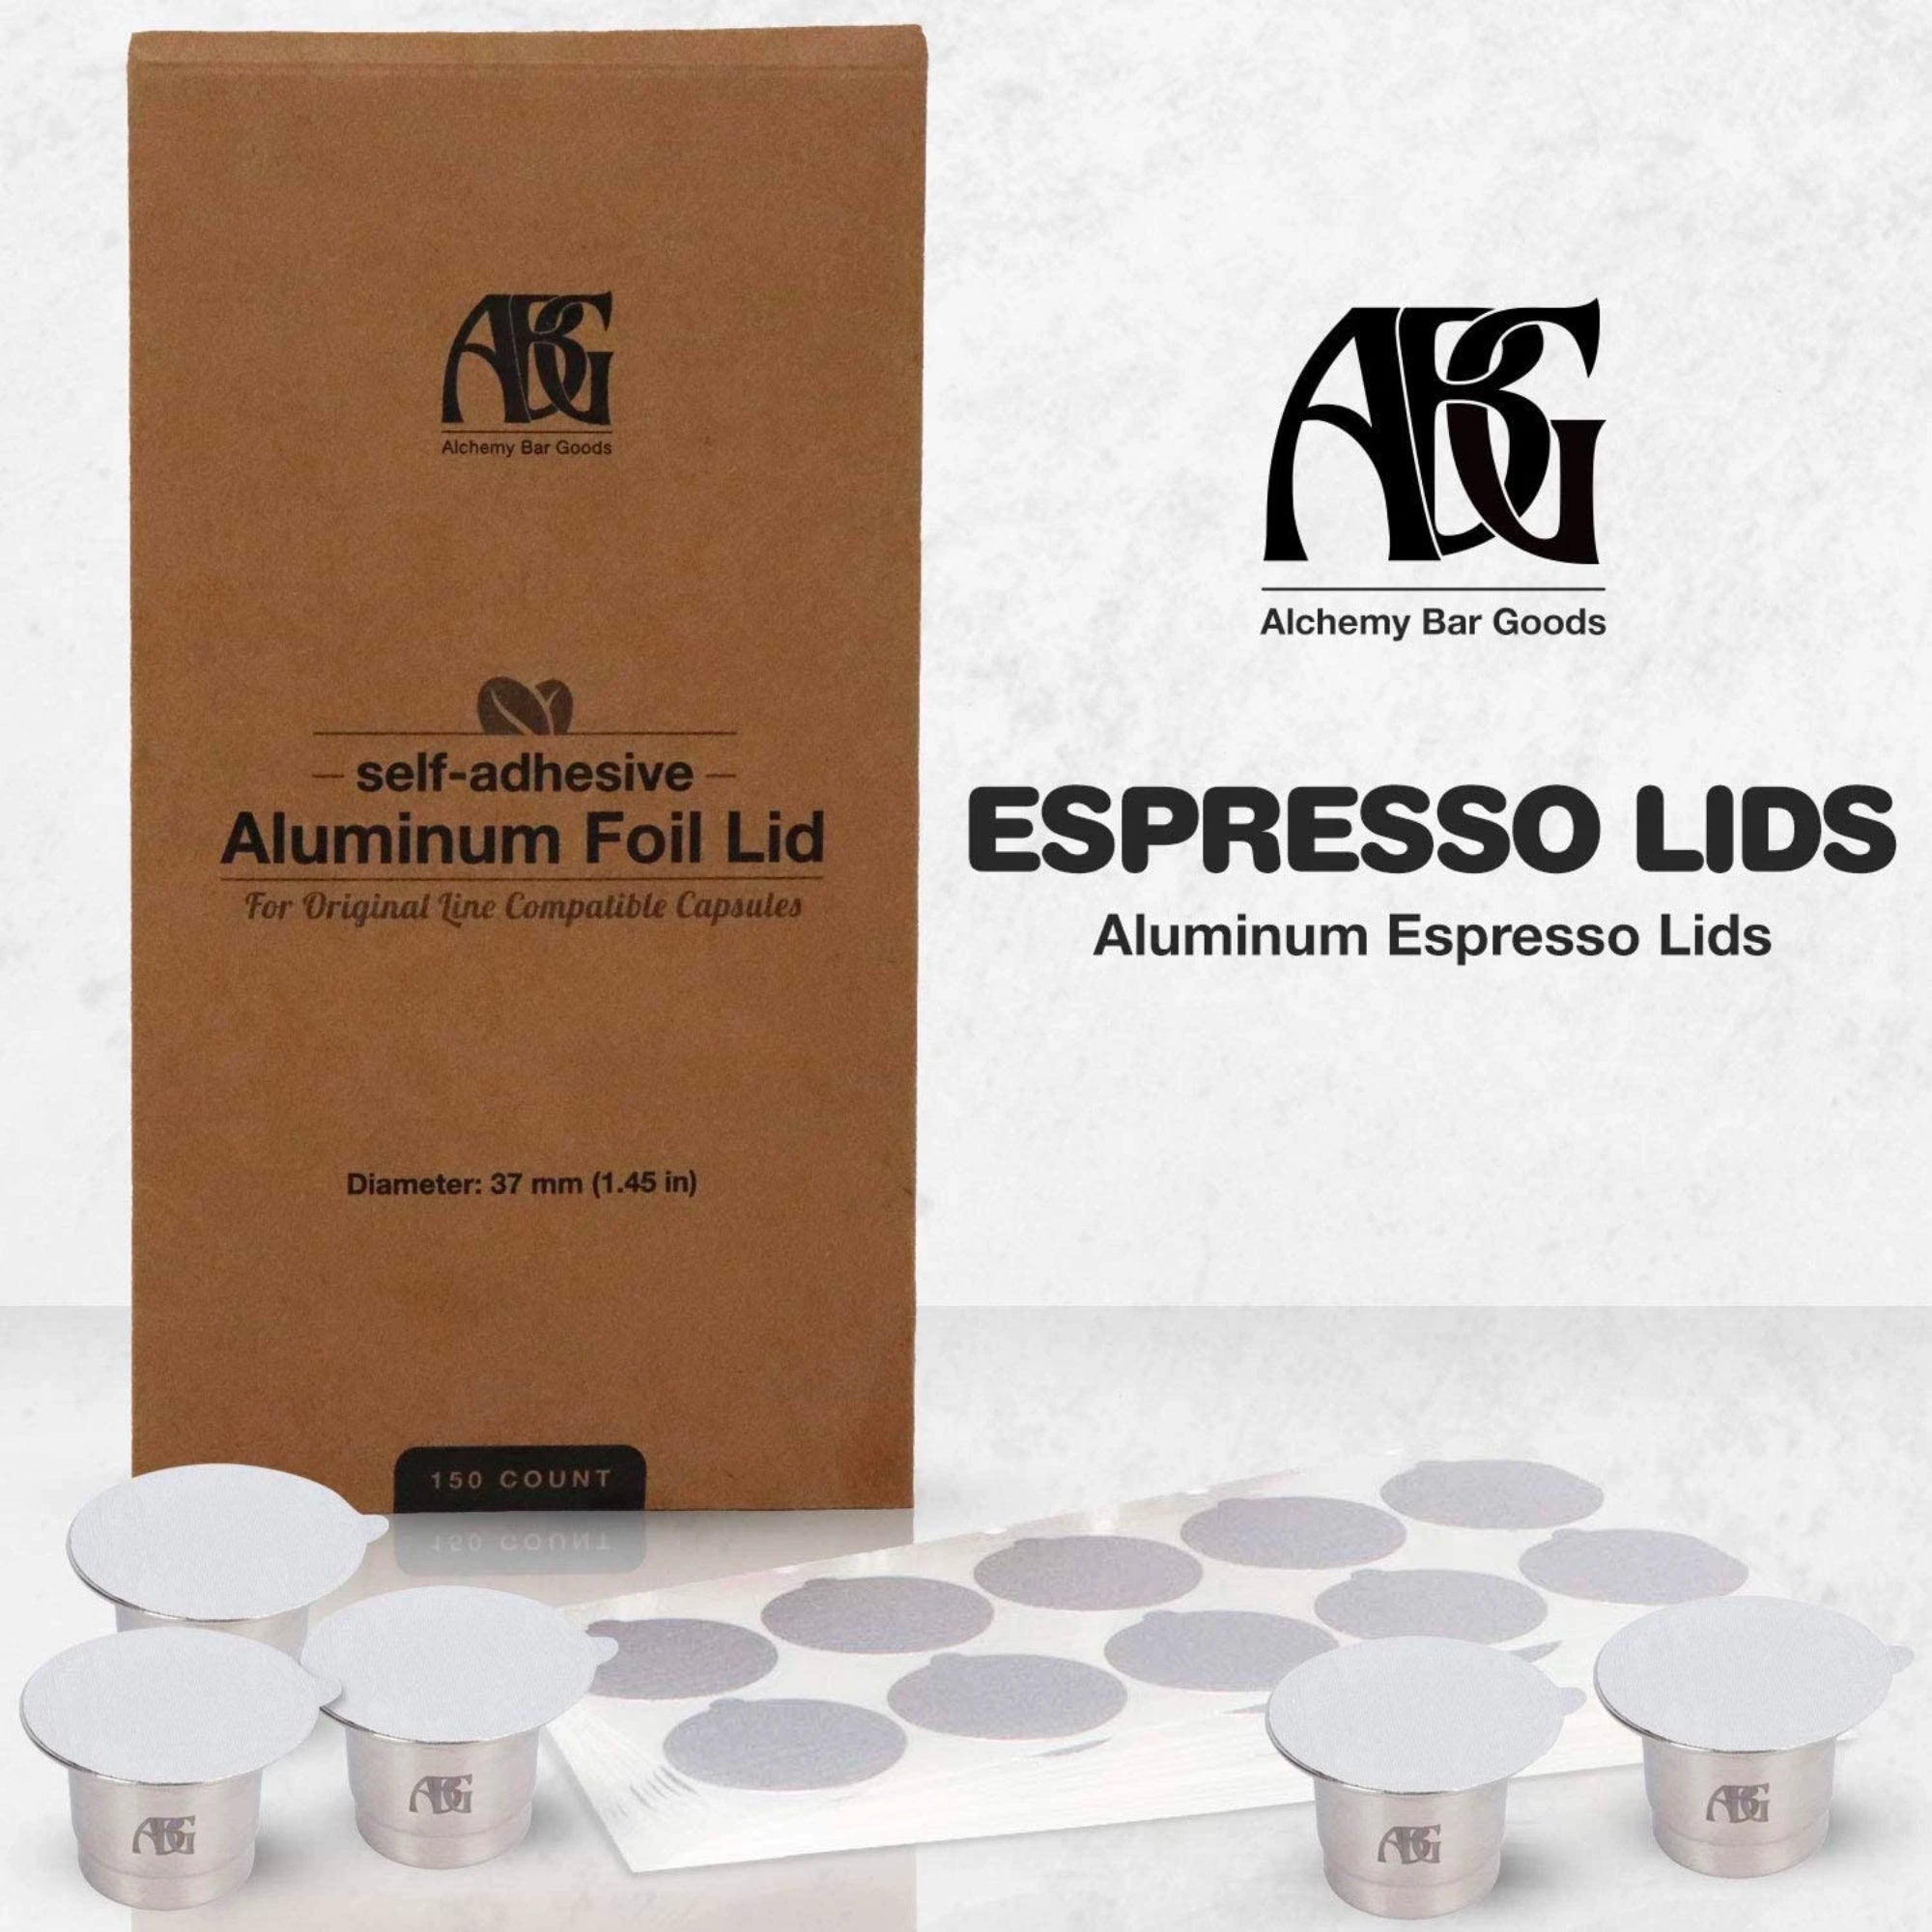 Nespresso Capsules Refillable - Reusable Coffee Pods For Nespresso Cups -  OriginalLine Compatible - Pack of 6 